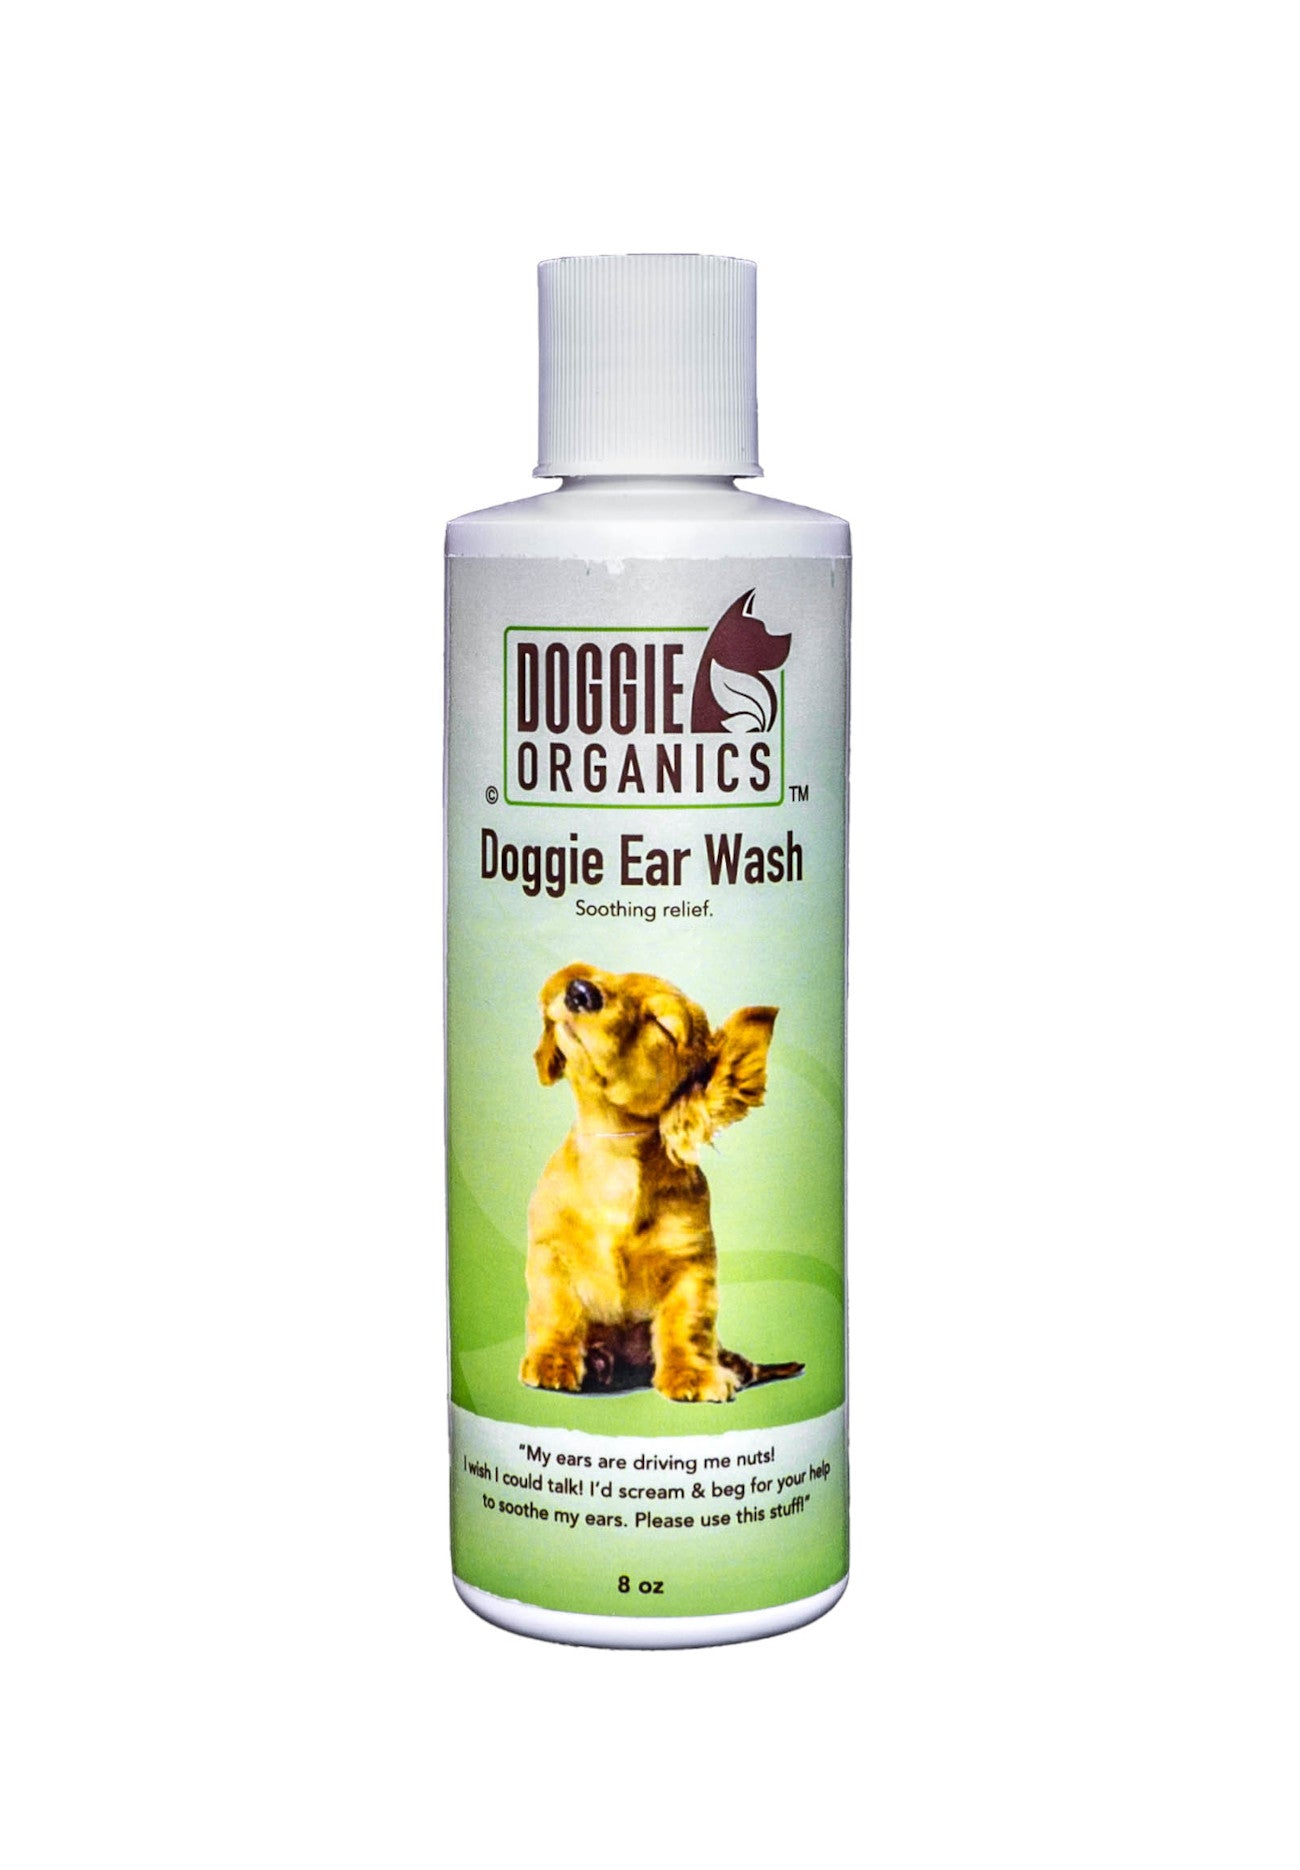 Doggie Ear Wash from Doggie Organics.